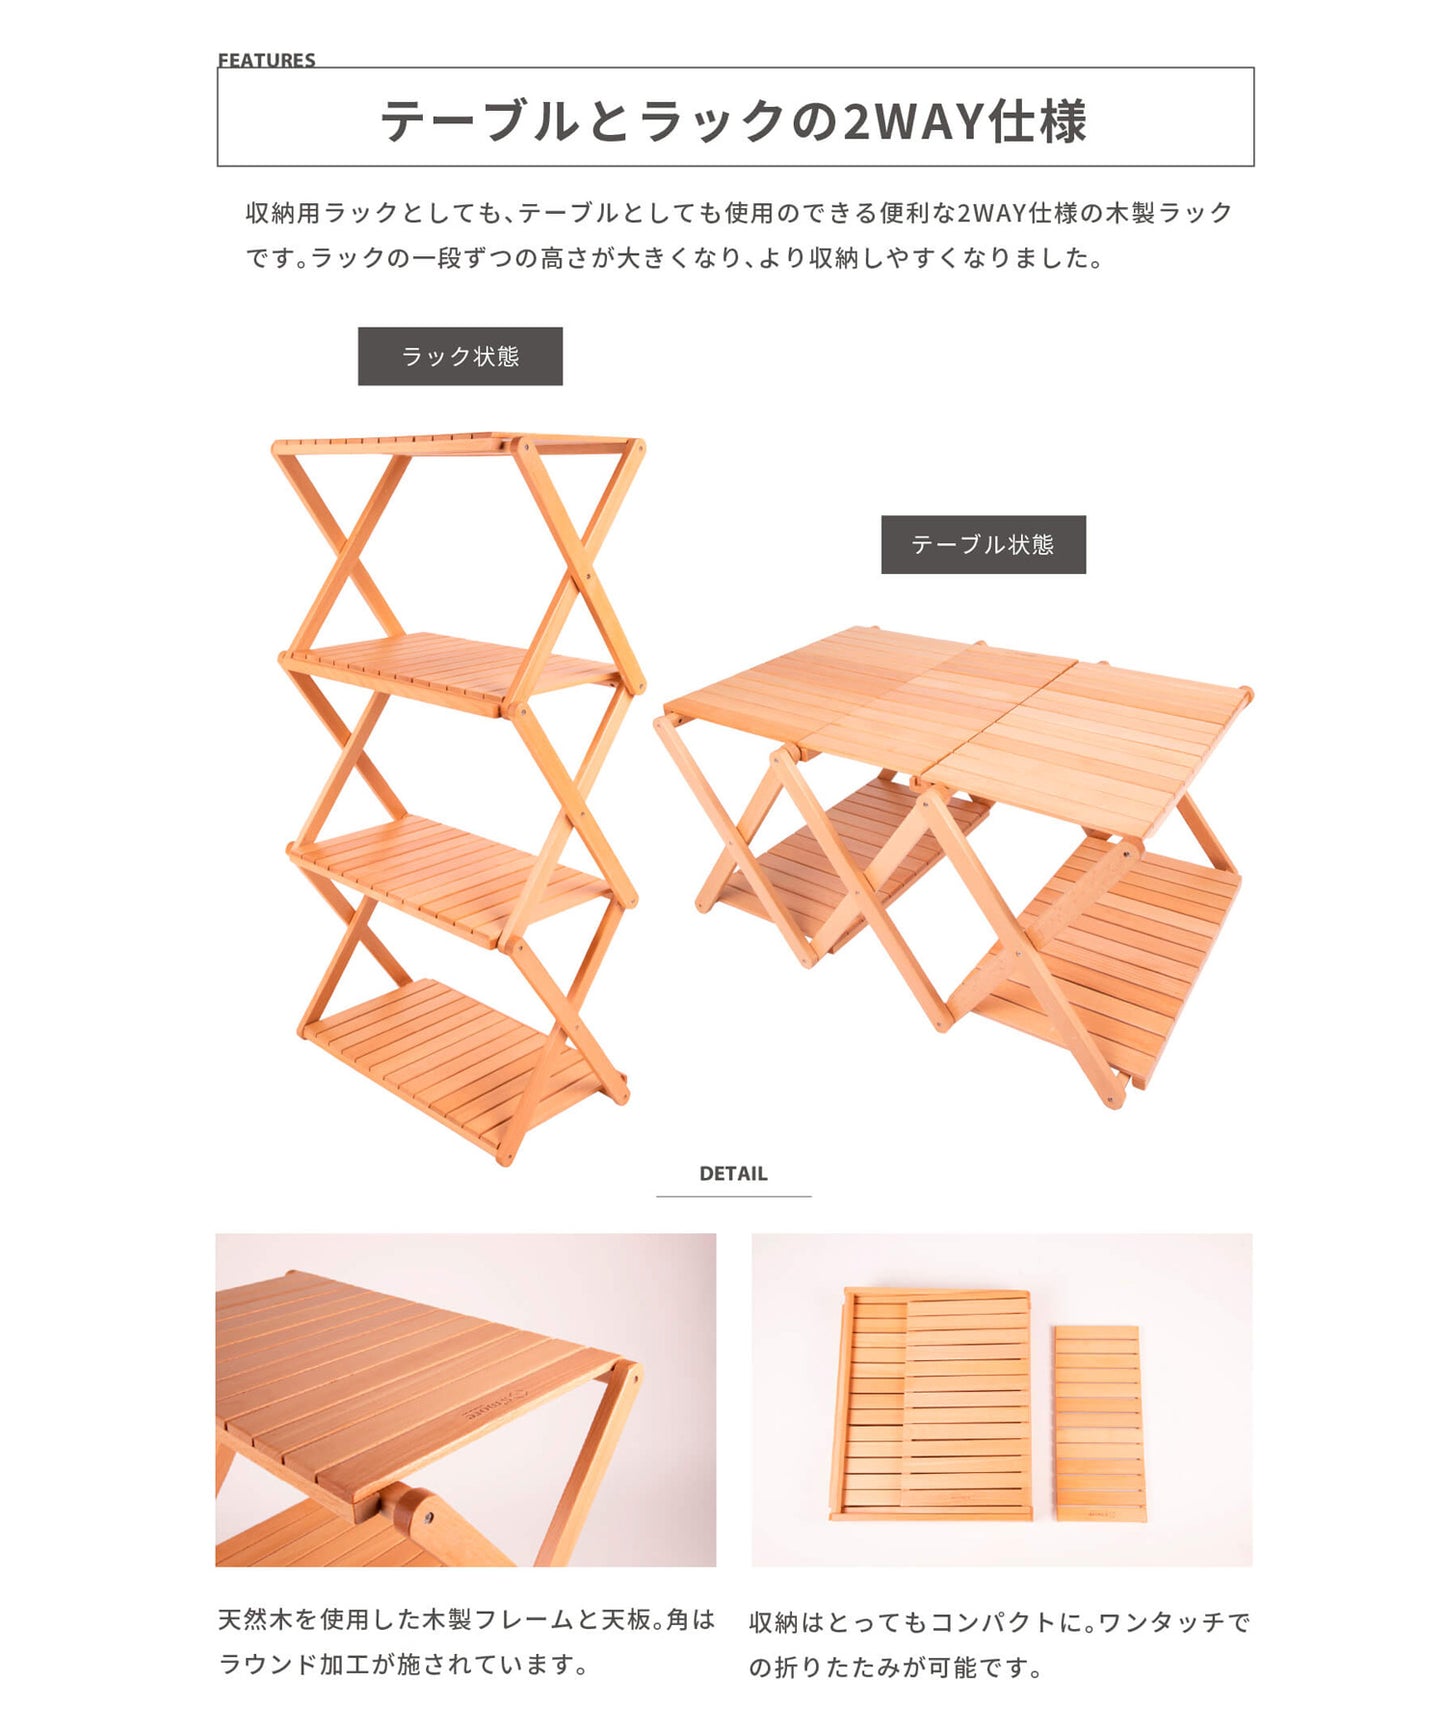 New!!【Woodi Folding Rack / 2way 】ウッディフォールディングラック テーブルにも変形する折り畳み木製4段ラック